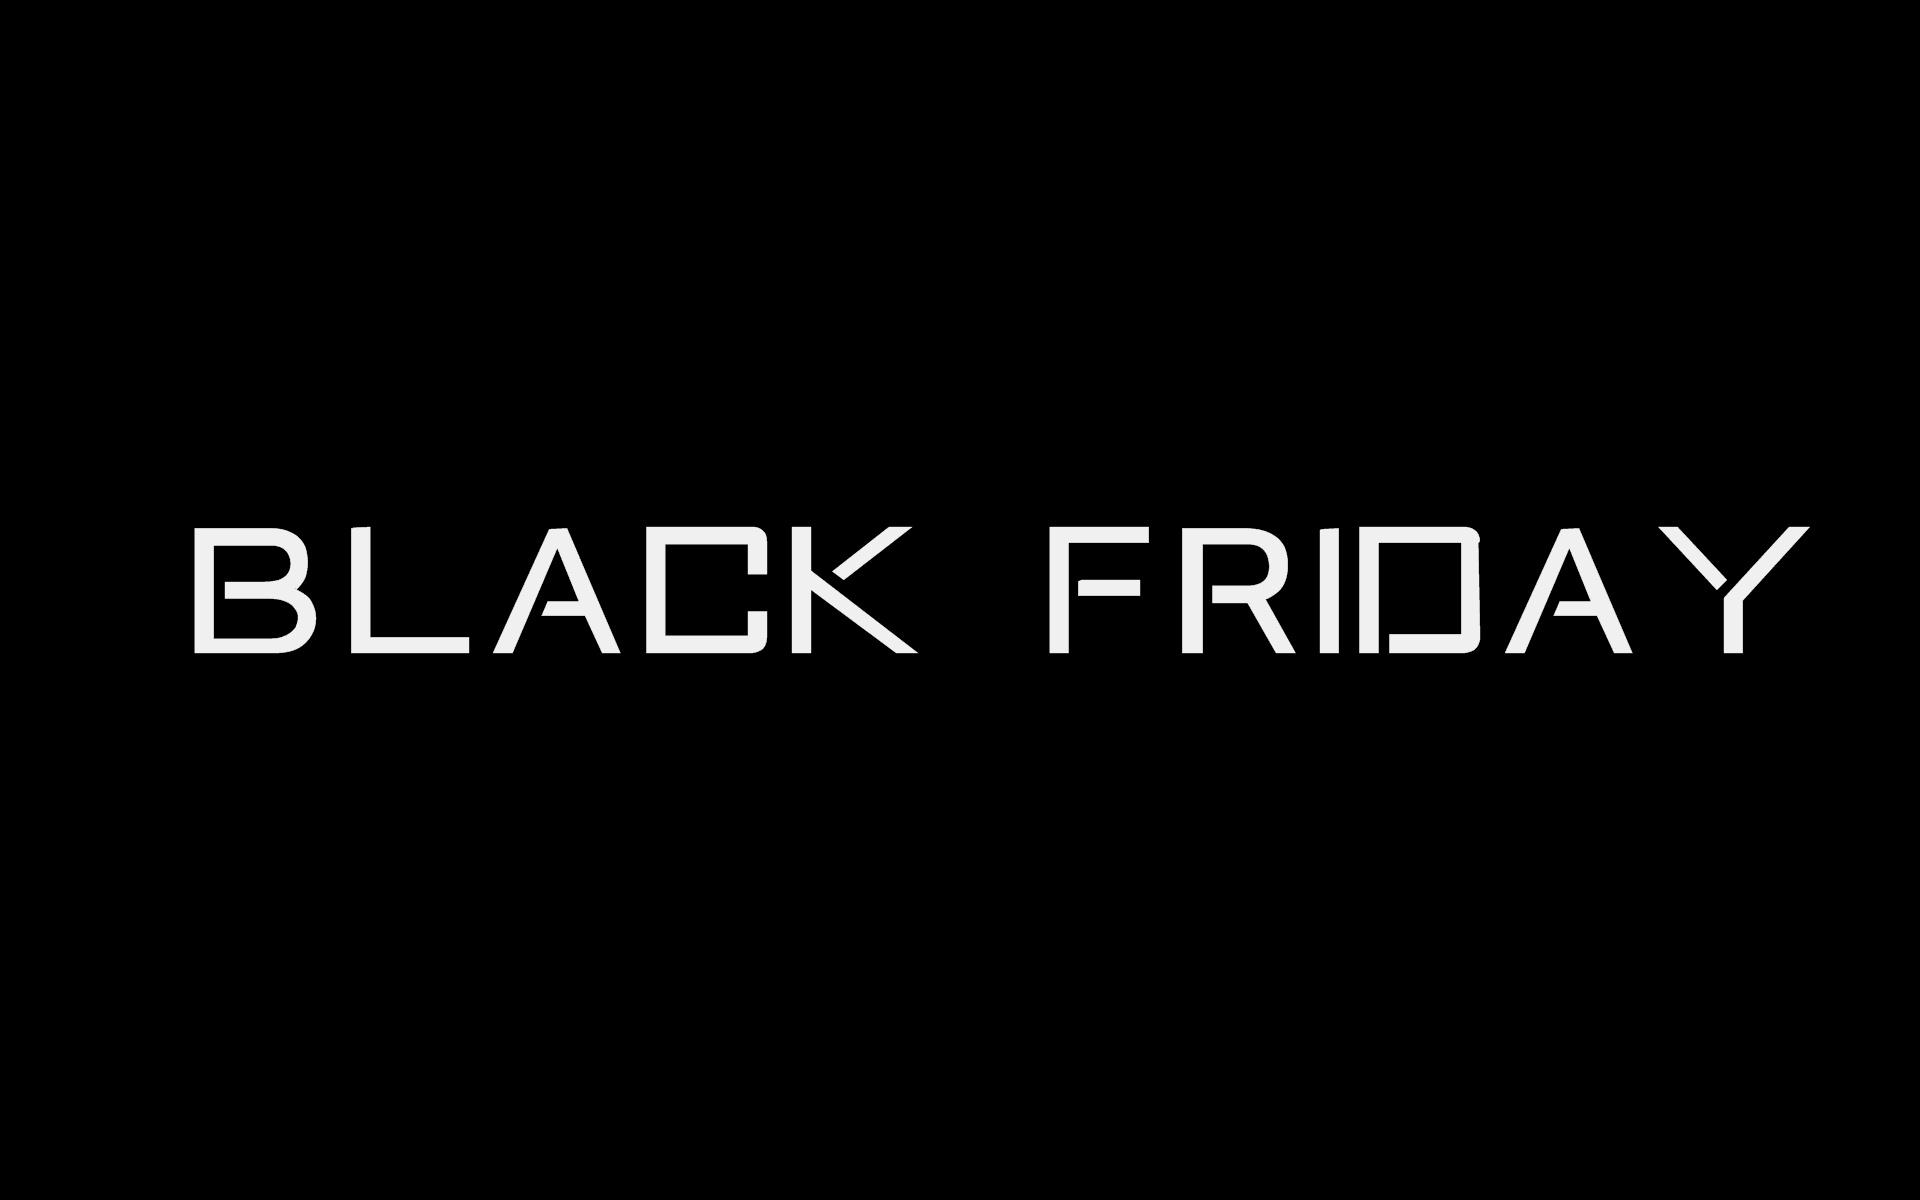 42684 Black Friday Wallpaper Images Stock Photos  Vectors  Shutterstock